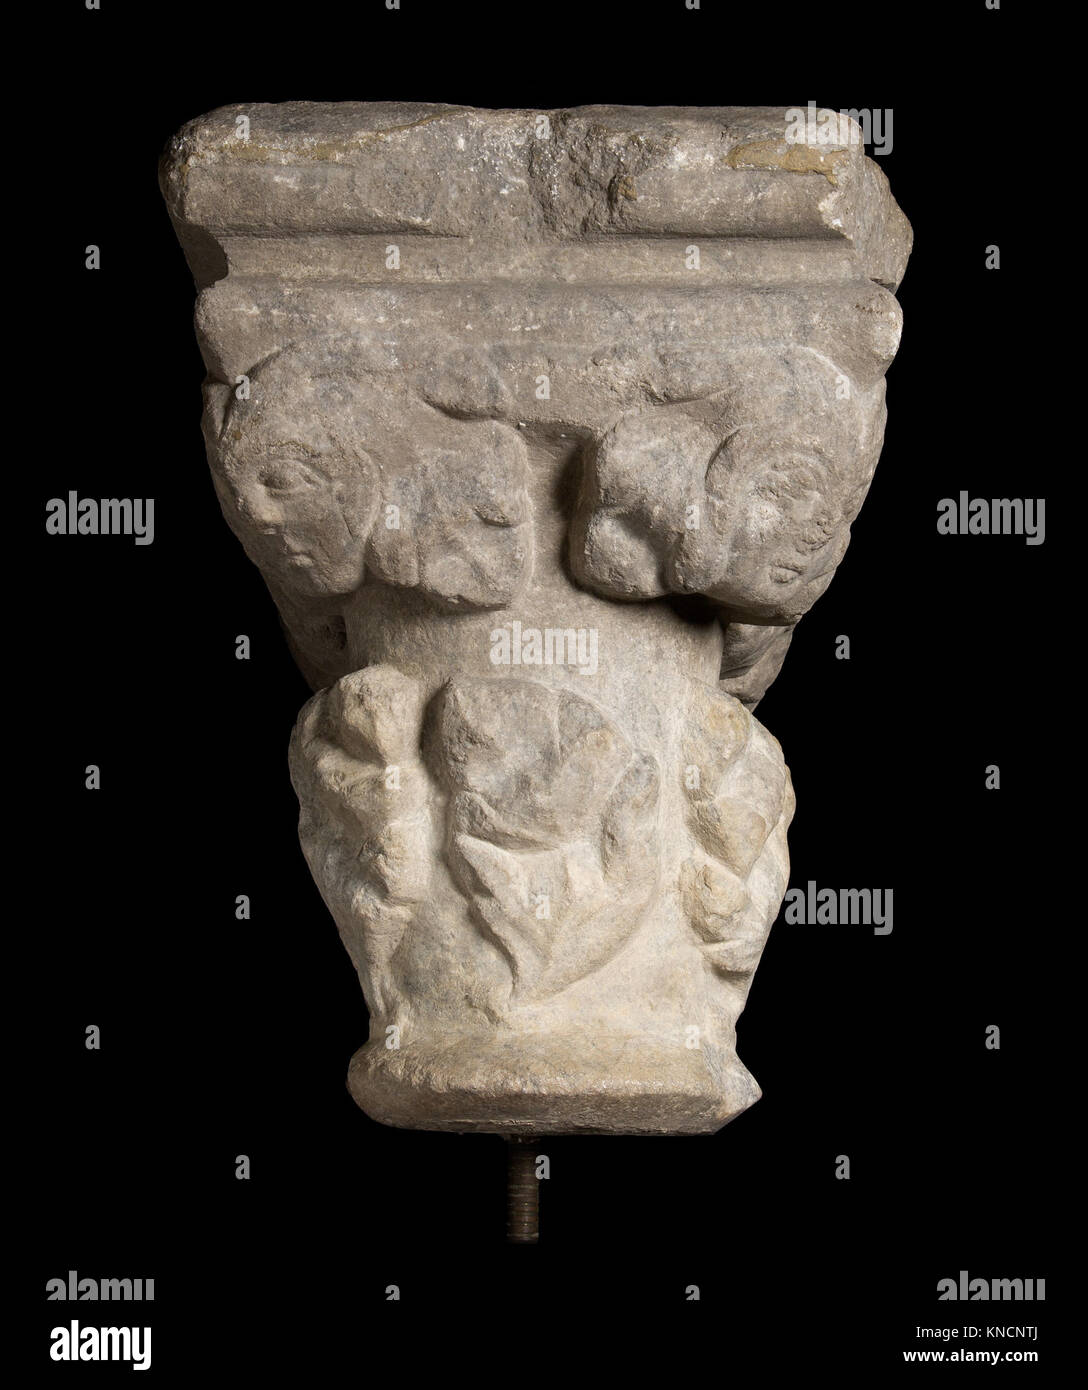 Double Column MET 16 32 6 Ein cdi-s2 463928 Französisch, Double Column, den 13.? aus dem 14. Jahrhundert, Marmor, Insgesamt (a: Kapital): 16 3/4 x 21 1/2 x 12 3/4 in. (42,5 x 54,6 x 32,4 cm) Insgesamt (b: Basis): 8 3/4 x 19 3/8 x 10 3/4 in. (22,2 x 49,2 x 27,3 cm). Das Metropolitan Museum of Art, New York. Geschenk der J. Pierpont Morgan, 1916 (16.32.6a, b) Stockfoto